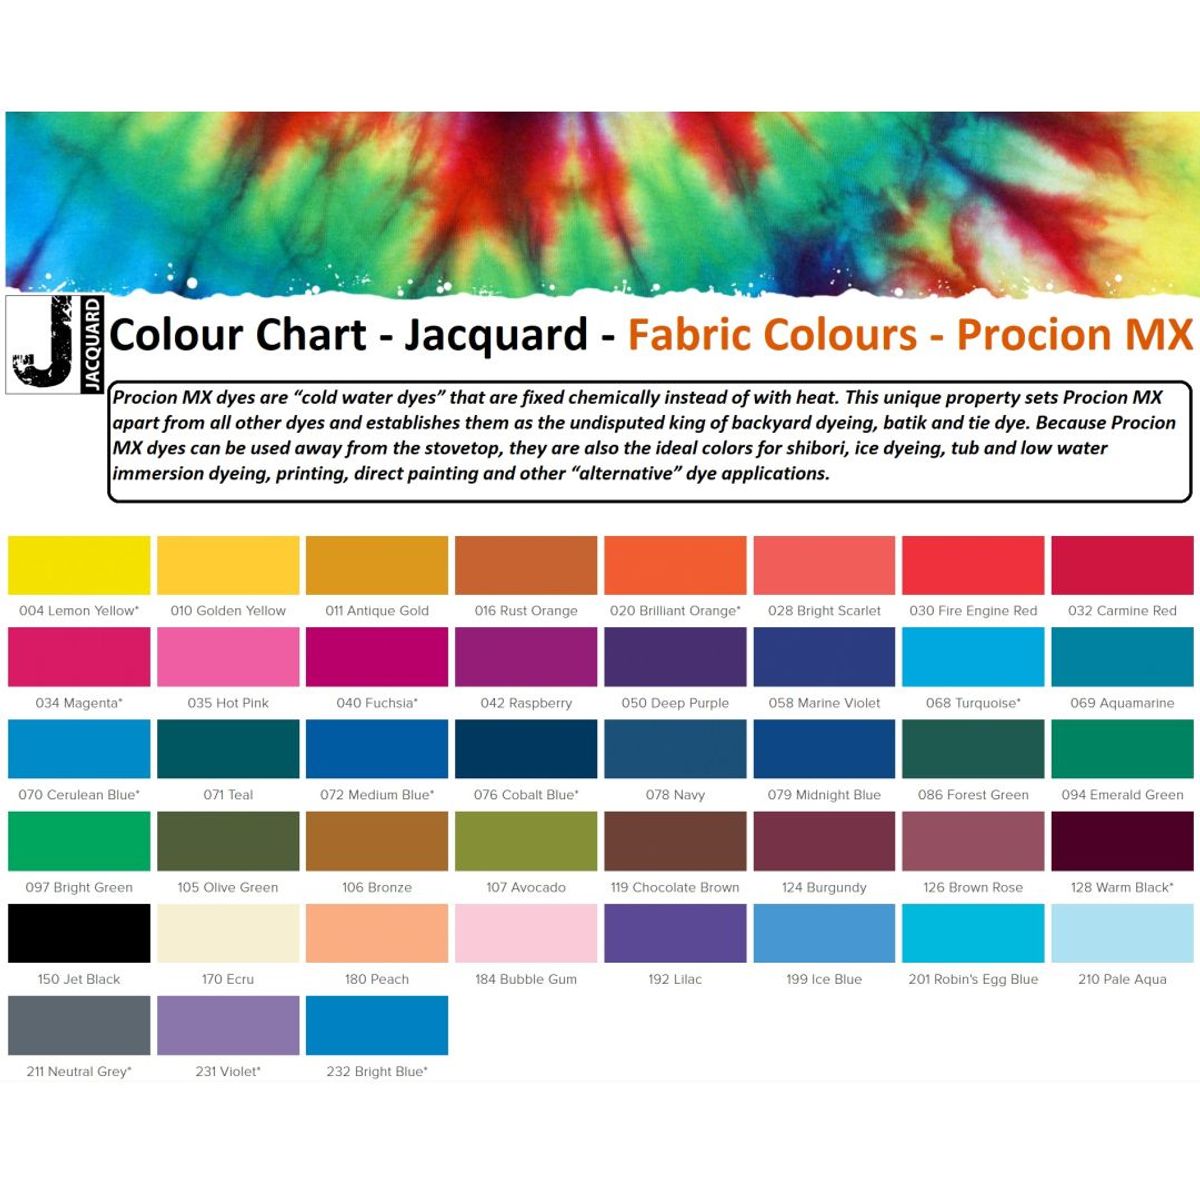 Jacquard - Procion MX Dye - Fabric Textile - Marine Violet 058